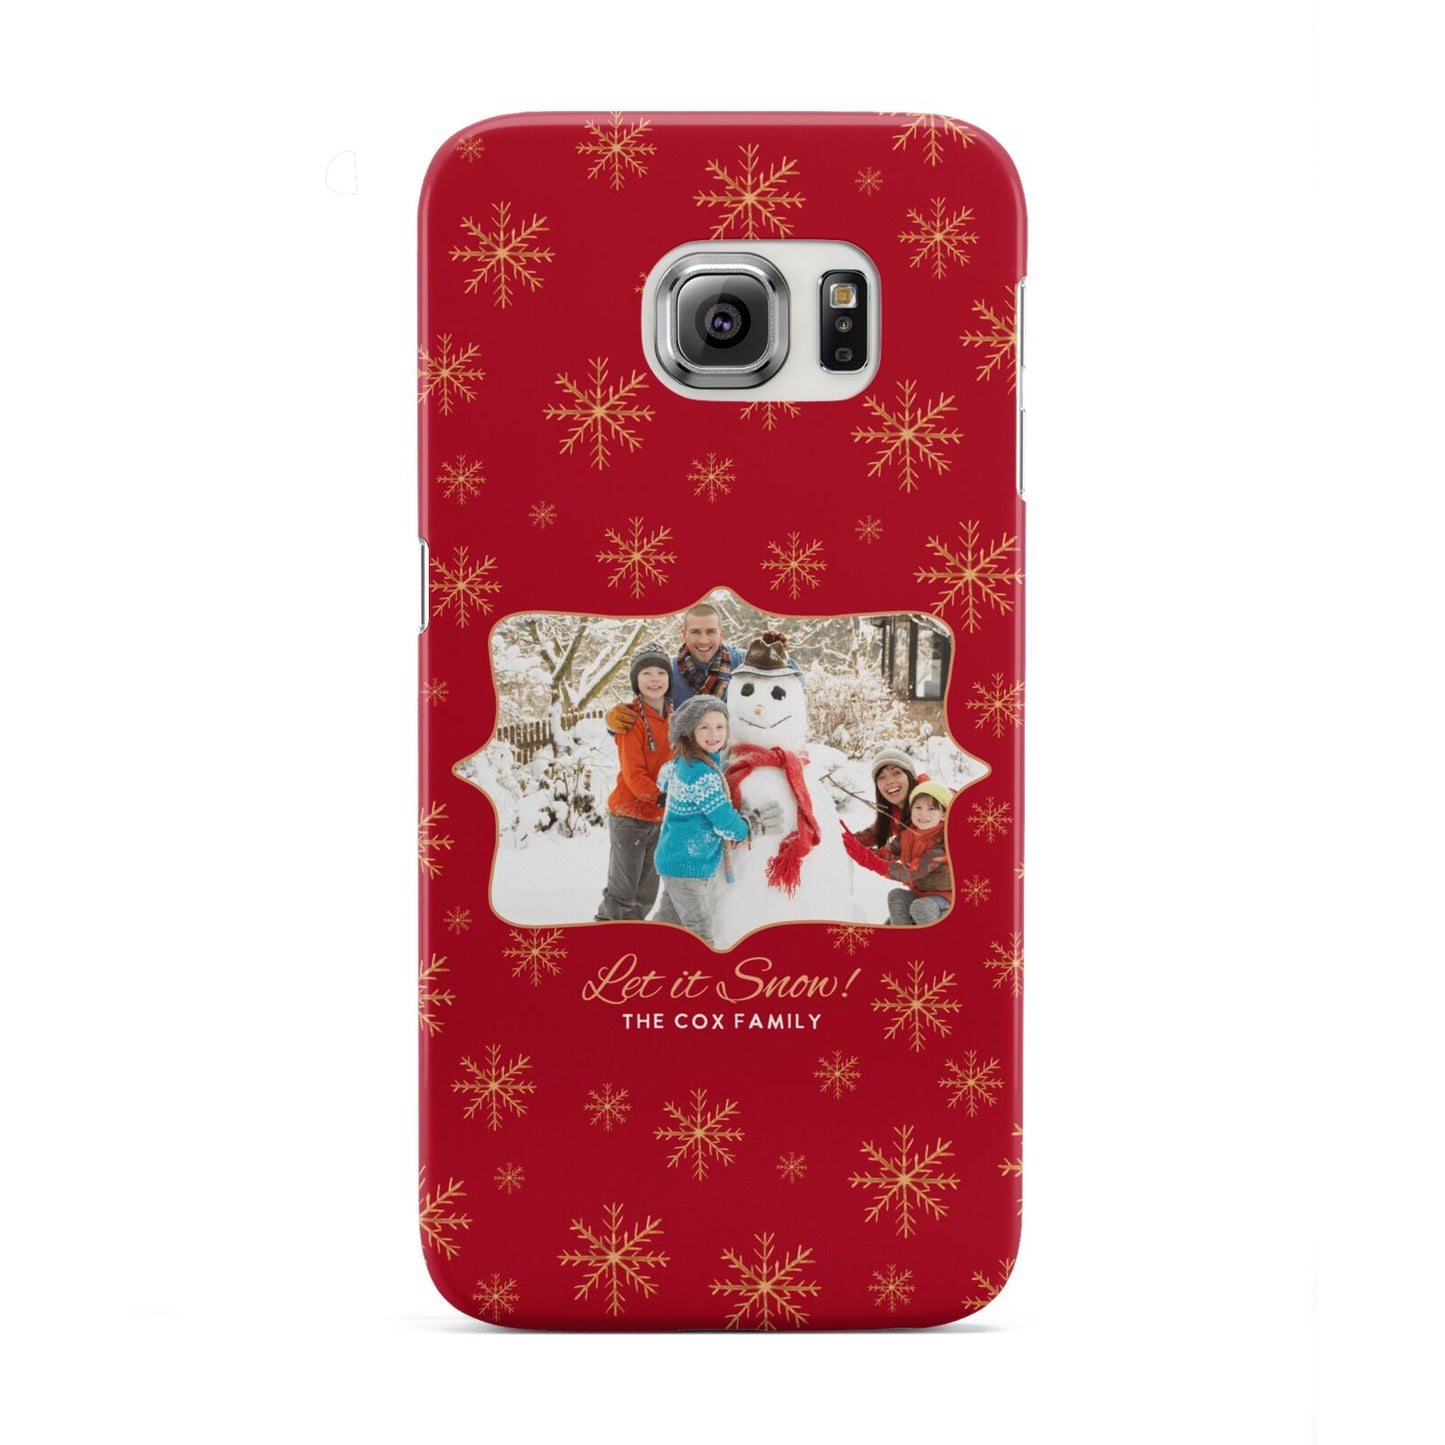 Let it Snow Christmas Photo Upload Samsung Galaxy S6 Edge Case